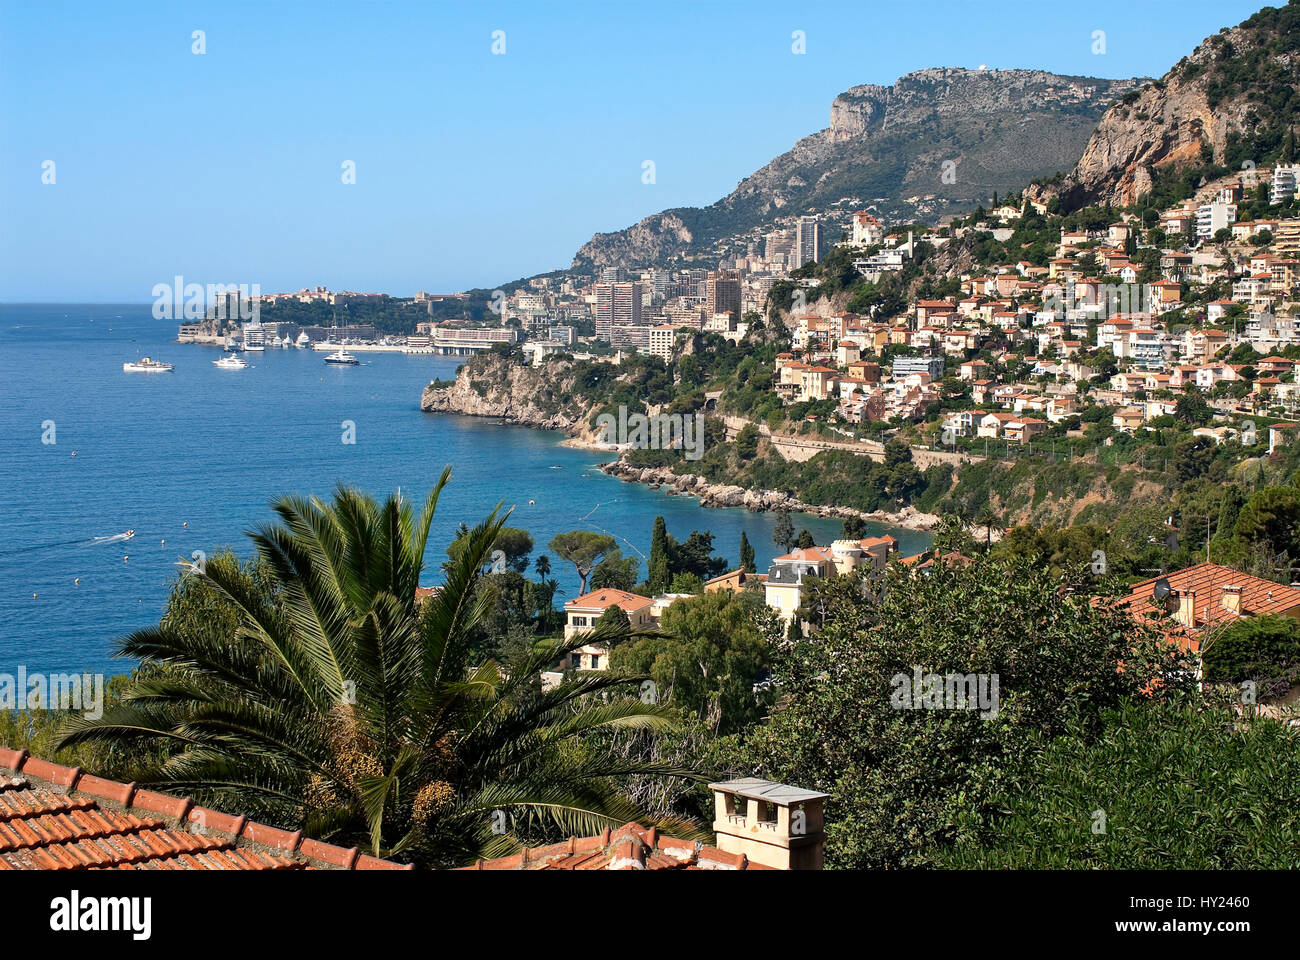 Stock Photo of a view along the coast line near Monaco at the French Rivera.  Blick ueber die Mittelmeerkueste in der Naehe von Monaco an der franzoes Stock Photo